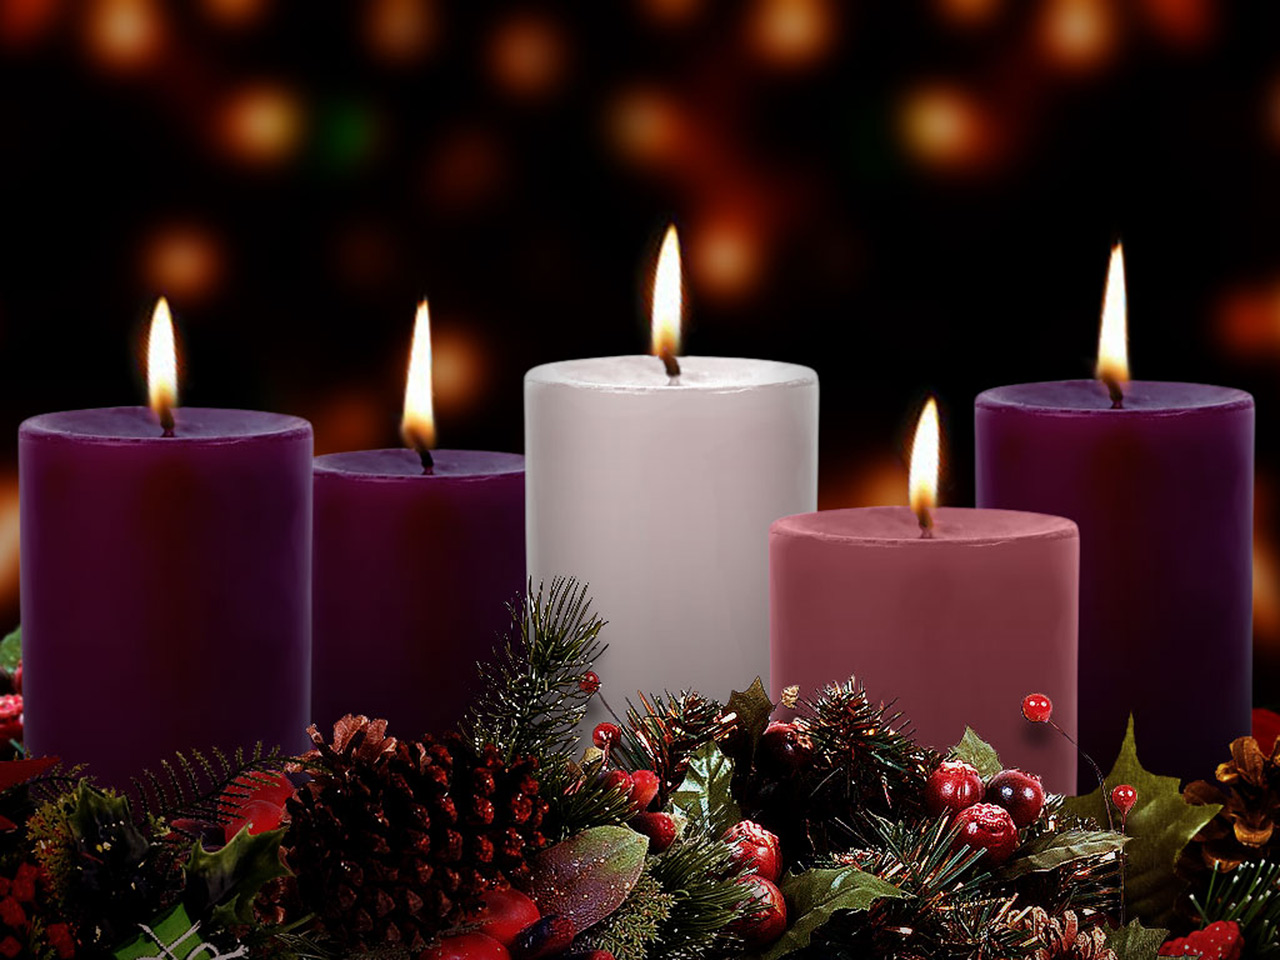 Five pillar candles of Advent